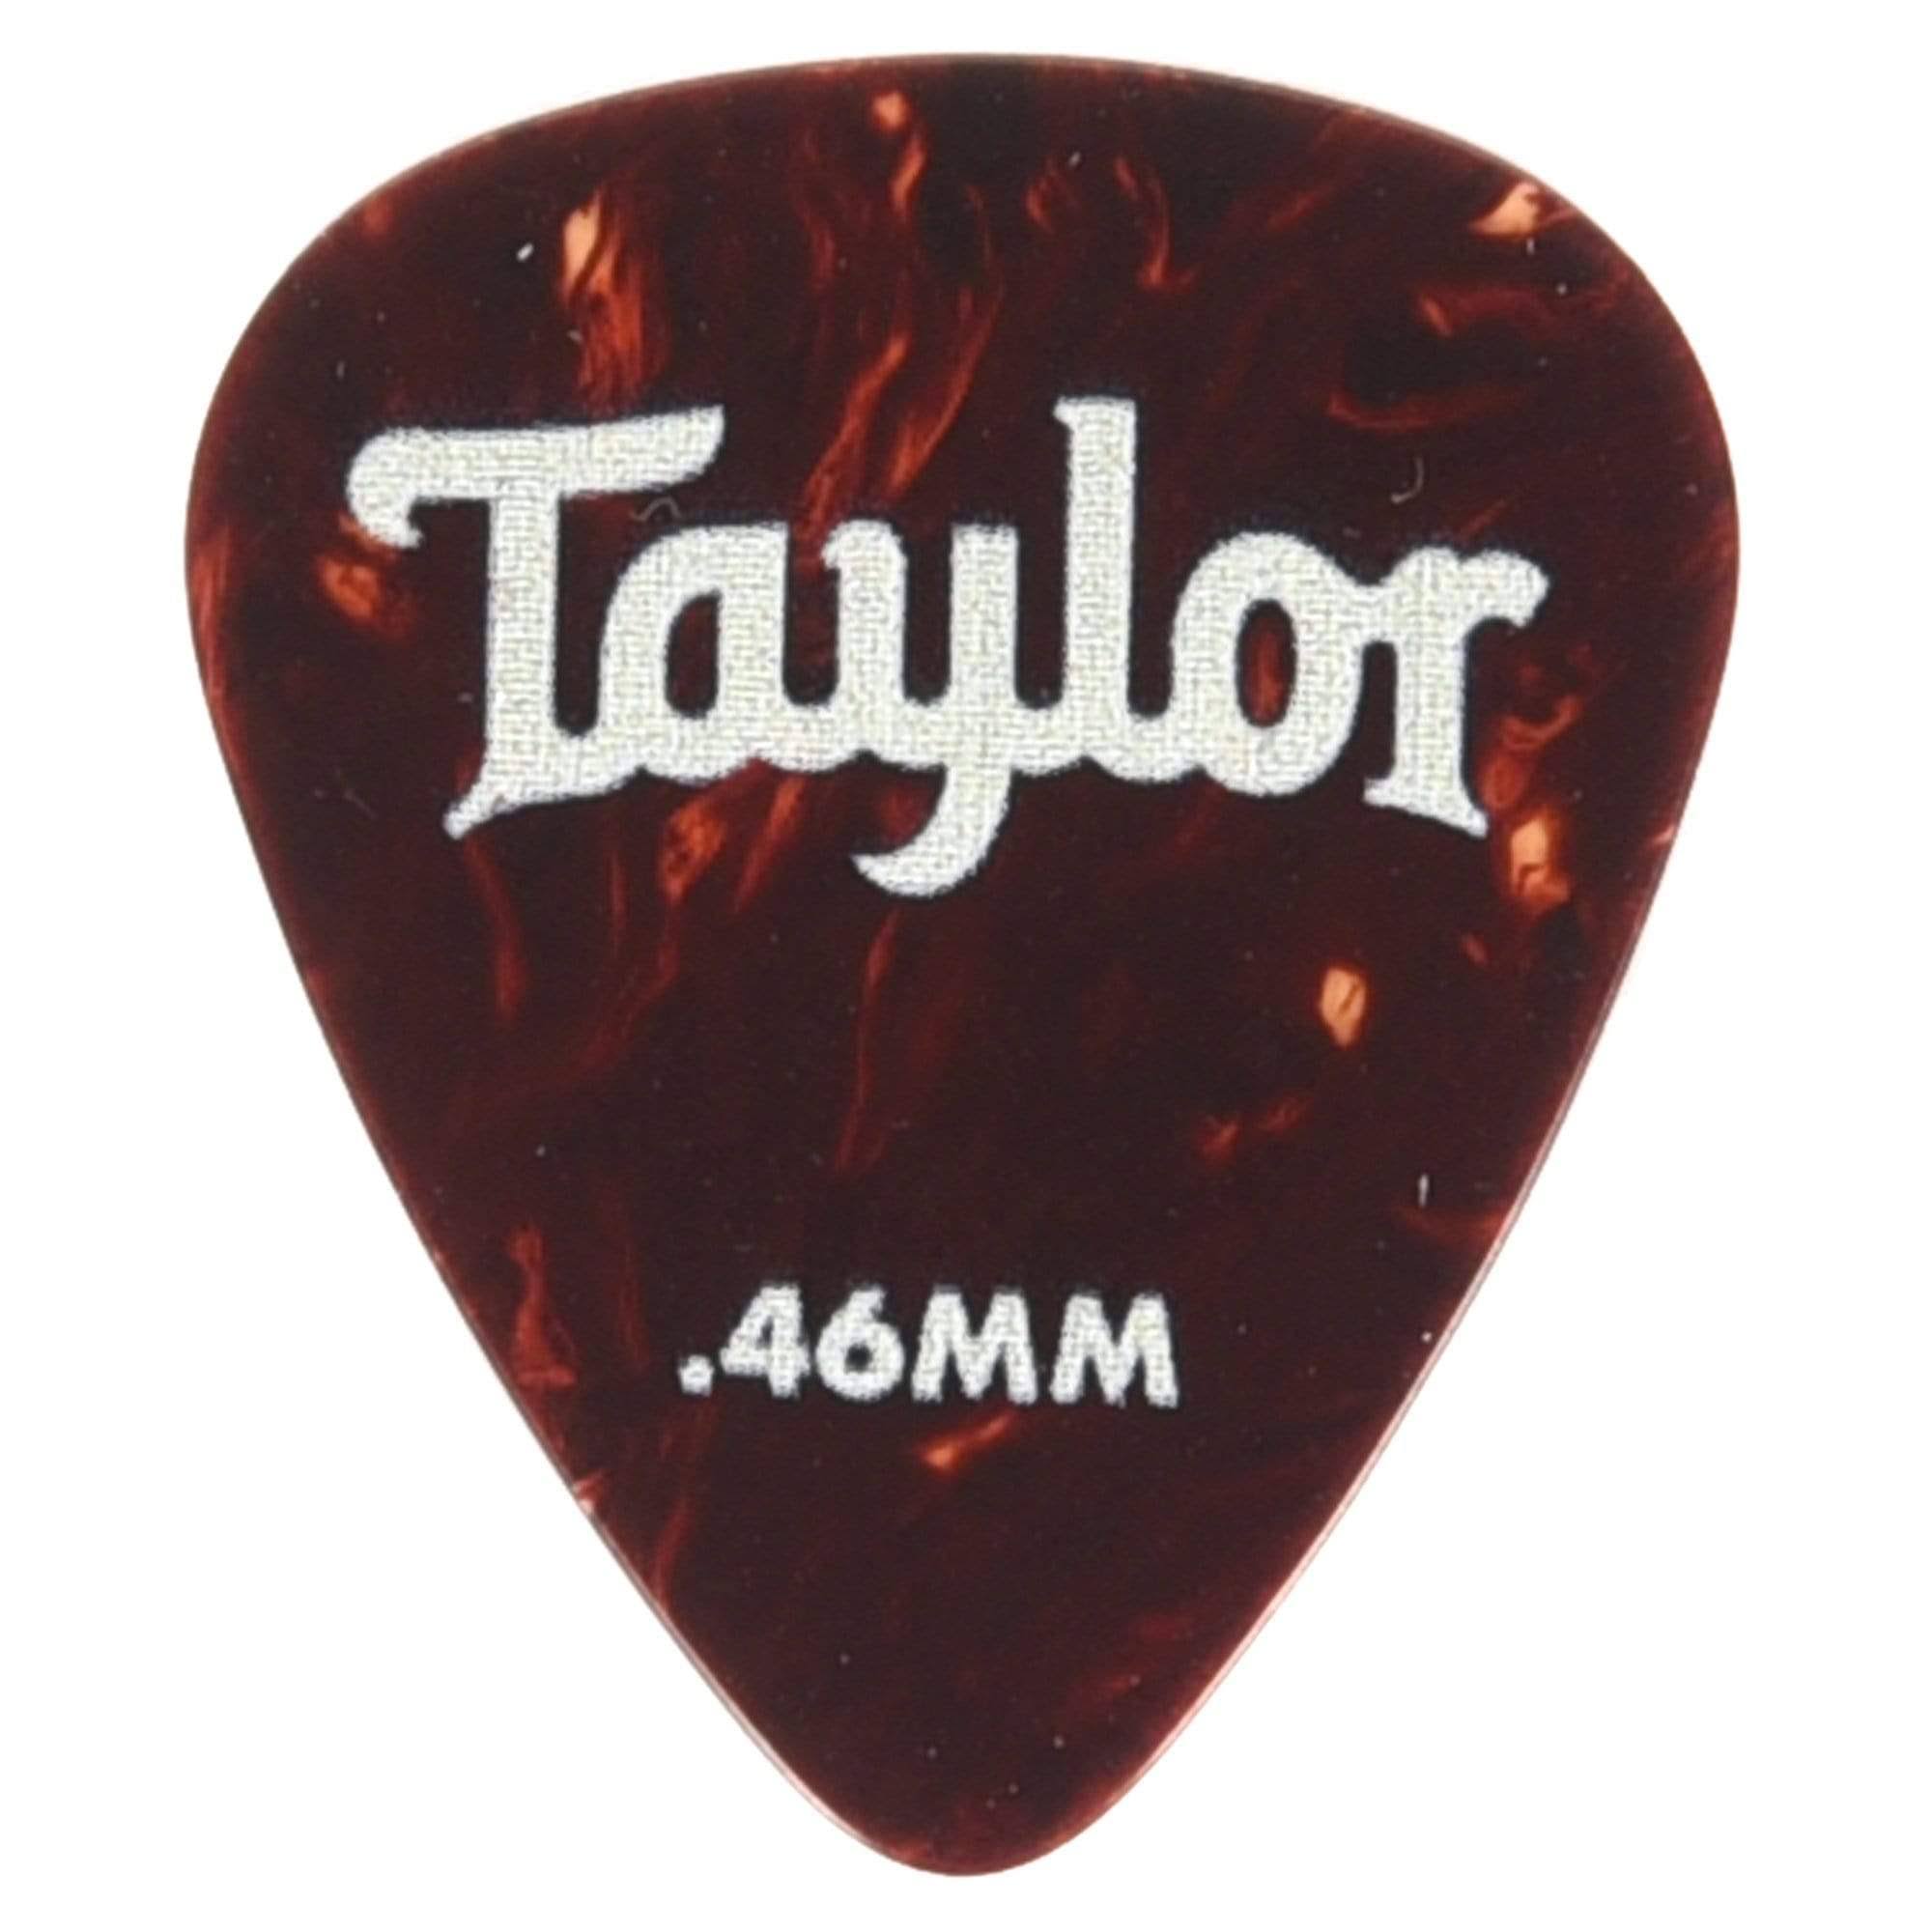 Taylor Celluloid 351 Picks, Tortoise Shell, 0.46mm, 12-Pack